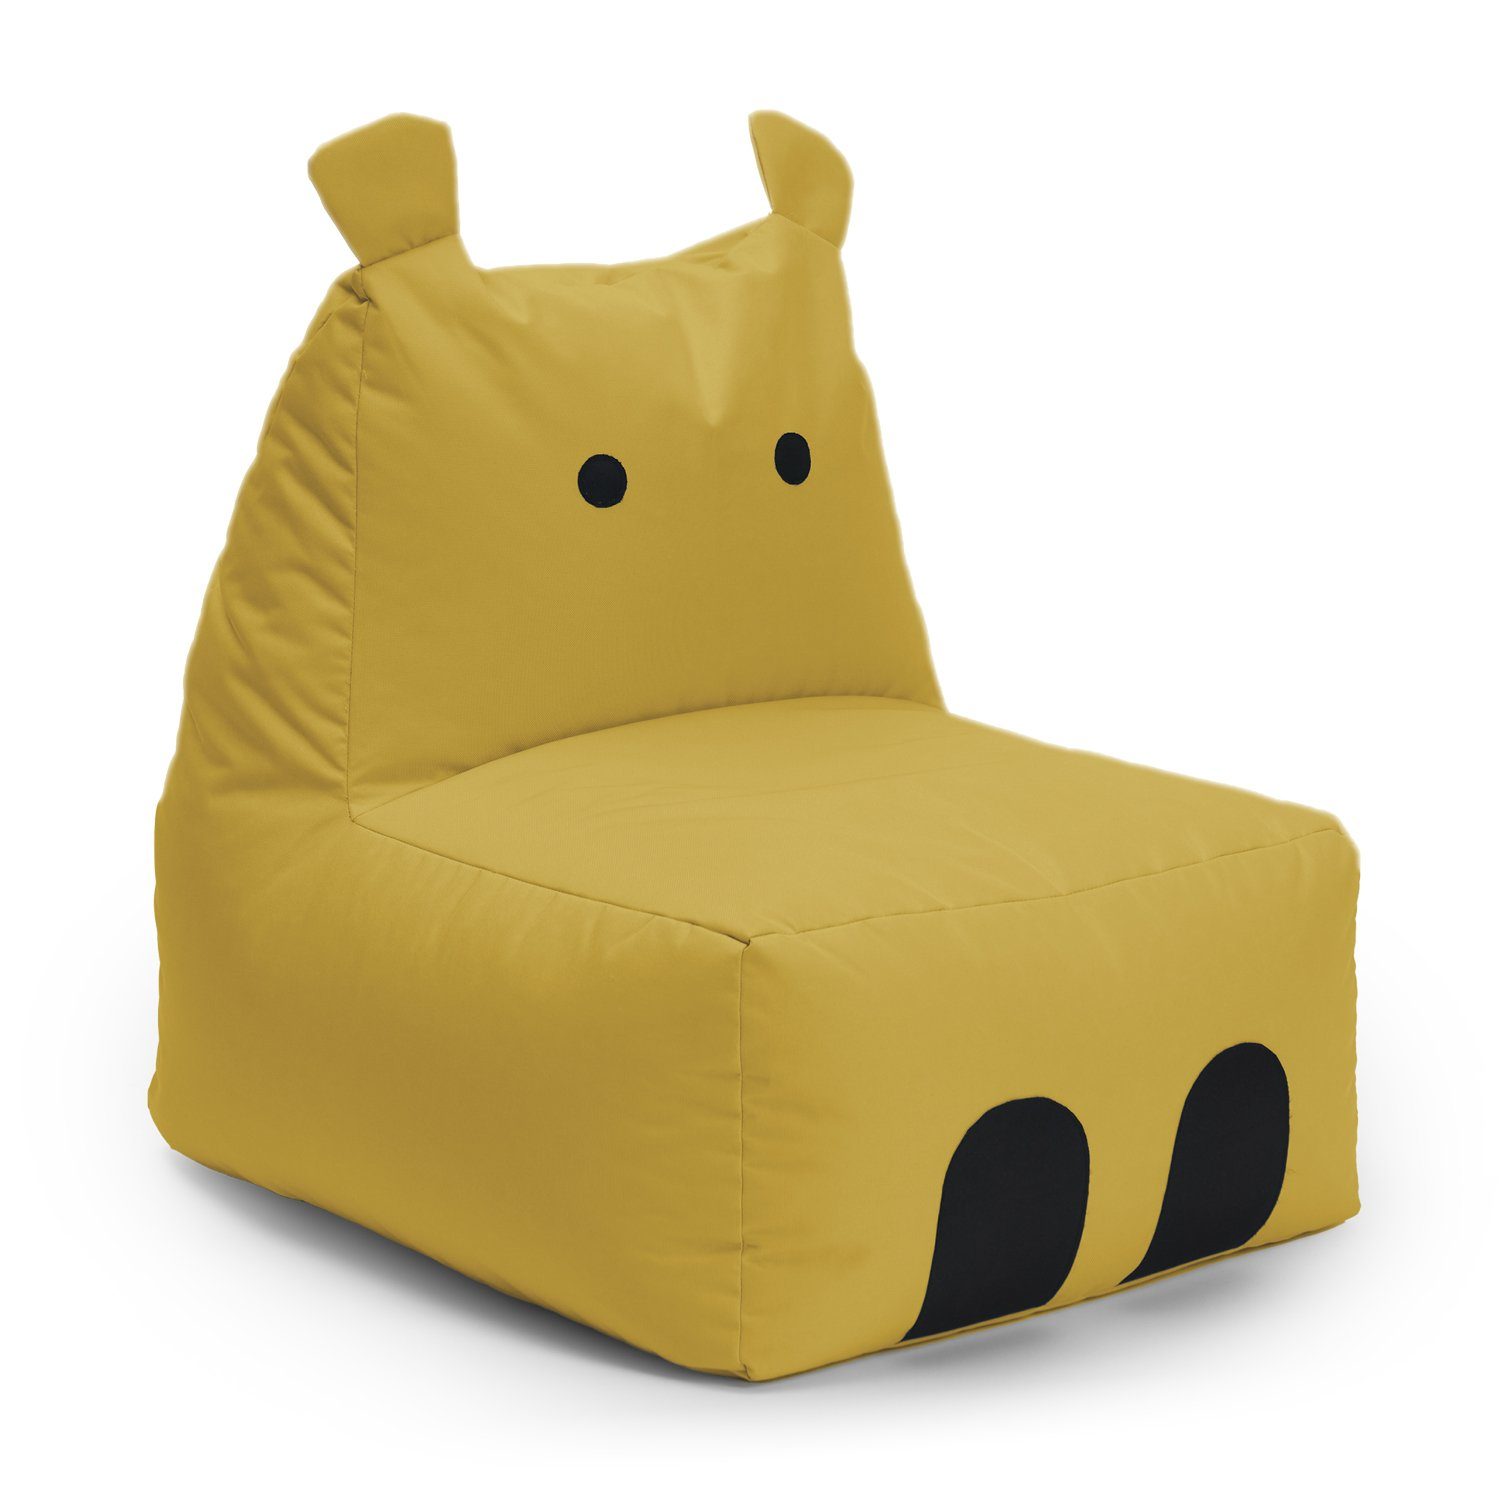 Wohlfühl cm Hippo Sitzkissen, 80x70x65 Motiv, Kids, Kissen pflegeleicht Senfgelb Tier Kindersitzsack), Sitzsack (1x süßes Kinder Lumaland